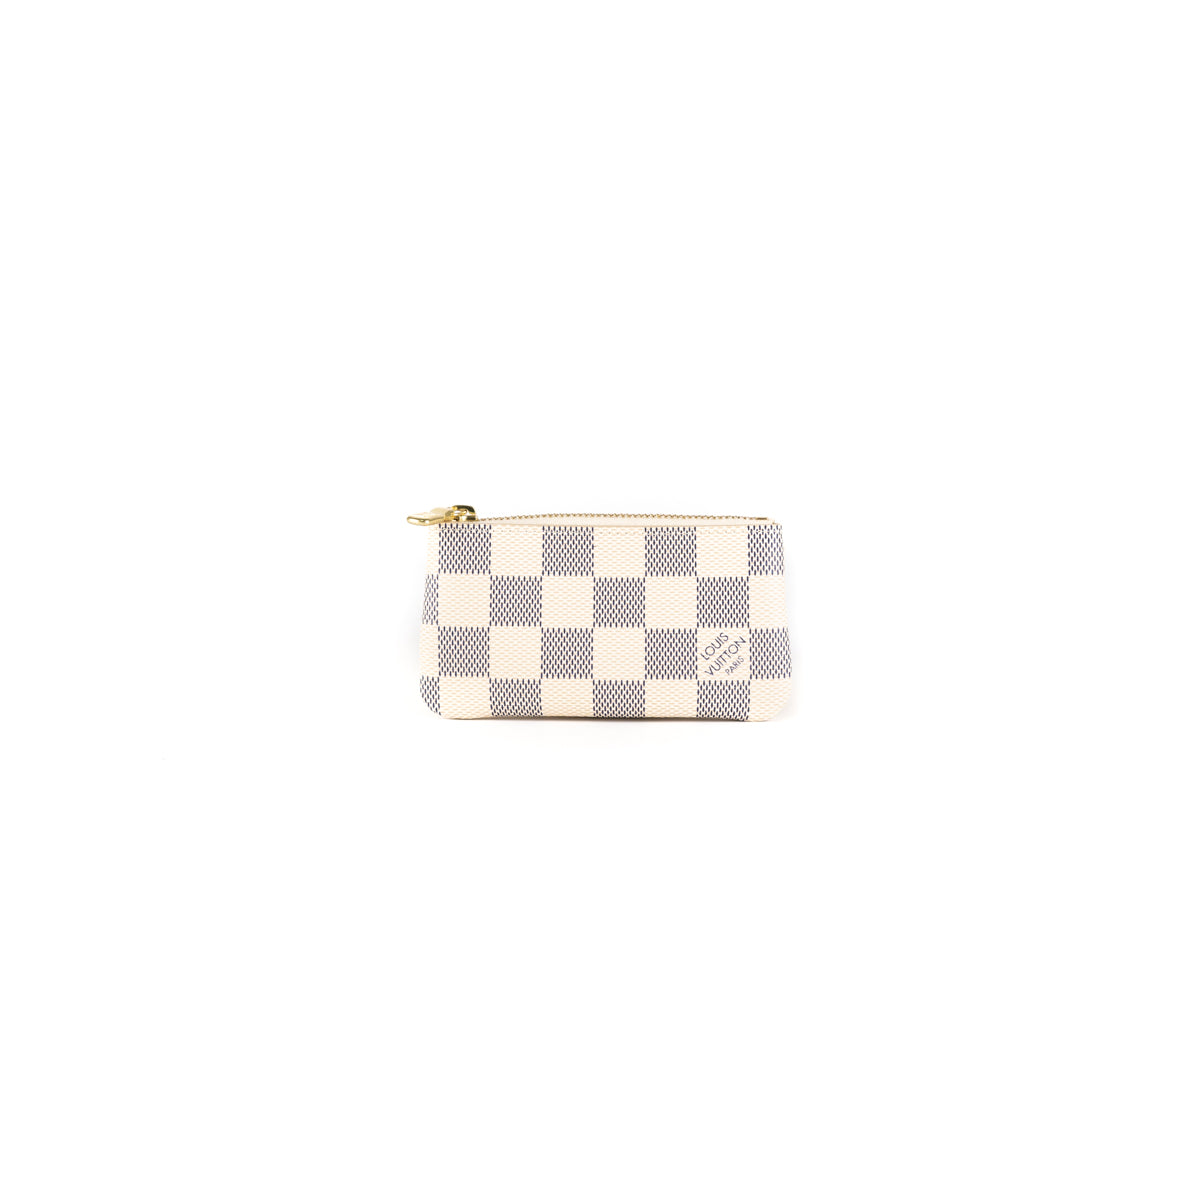 Louis Vuitton - Mini Key Pouch - Damier Azur - Immaculate